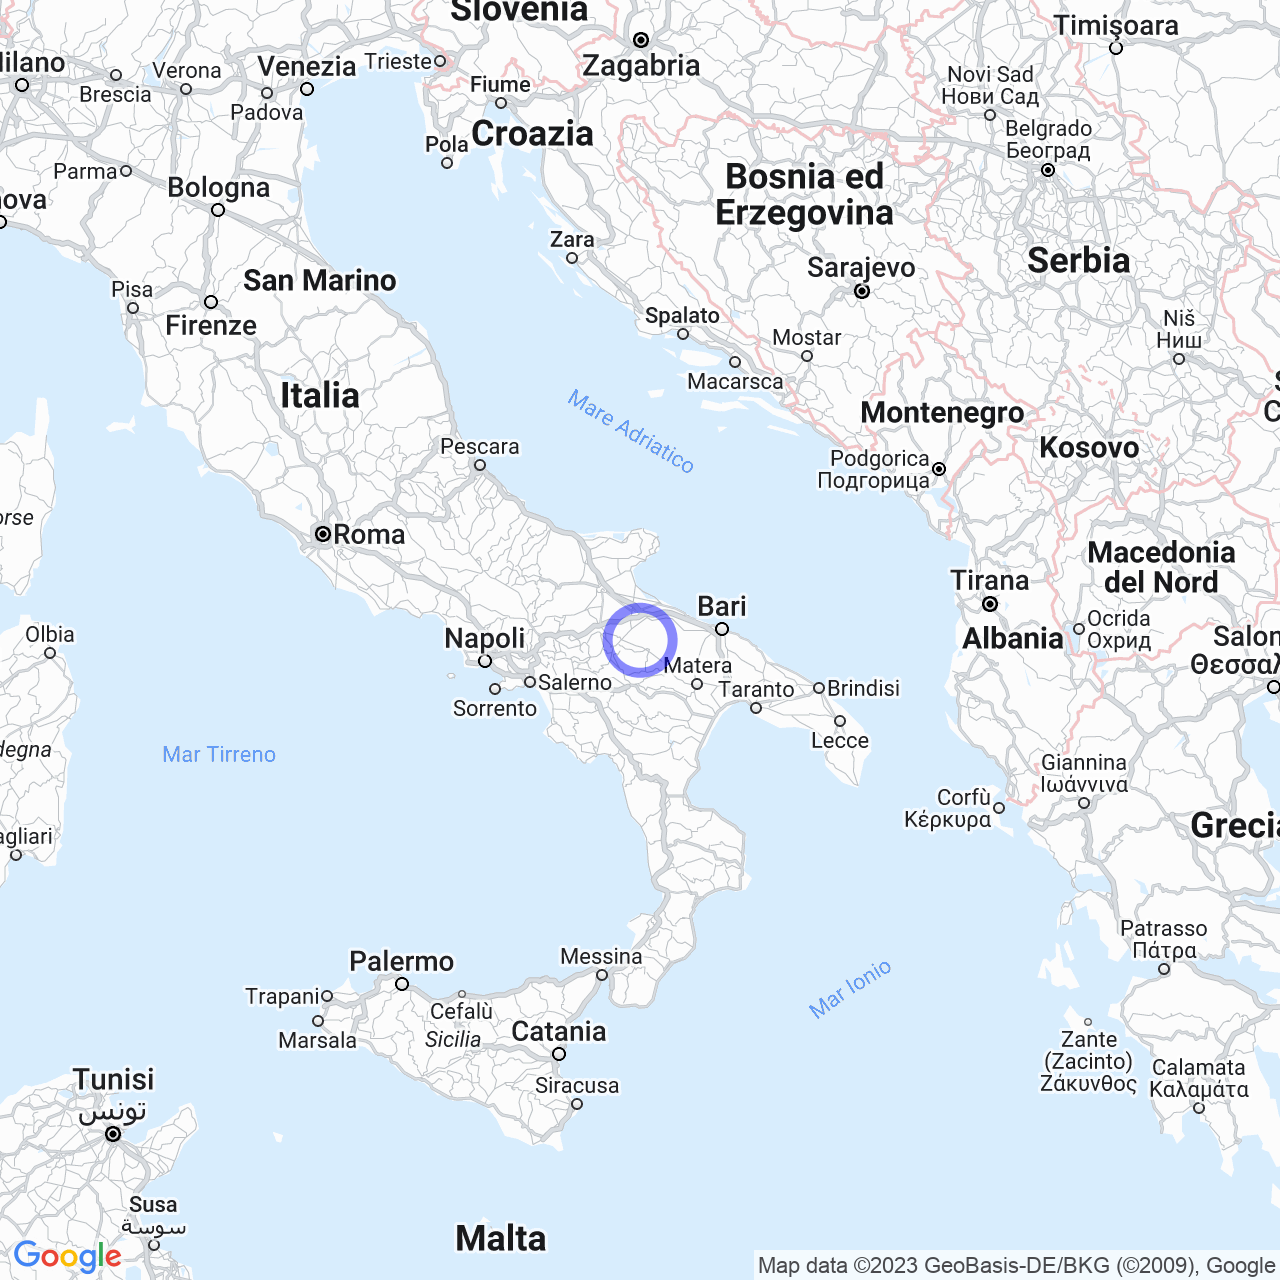 Montemilone: history, geology, and hydrography of the small Lucanian municipality.